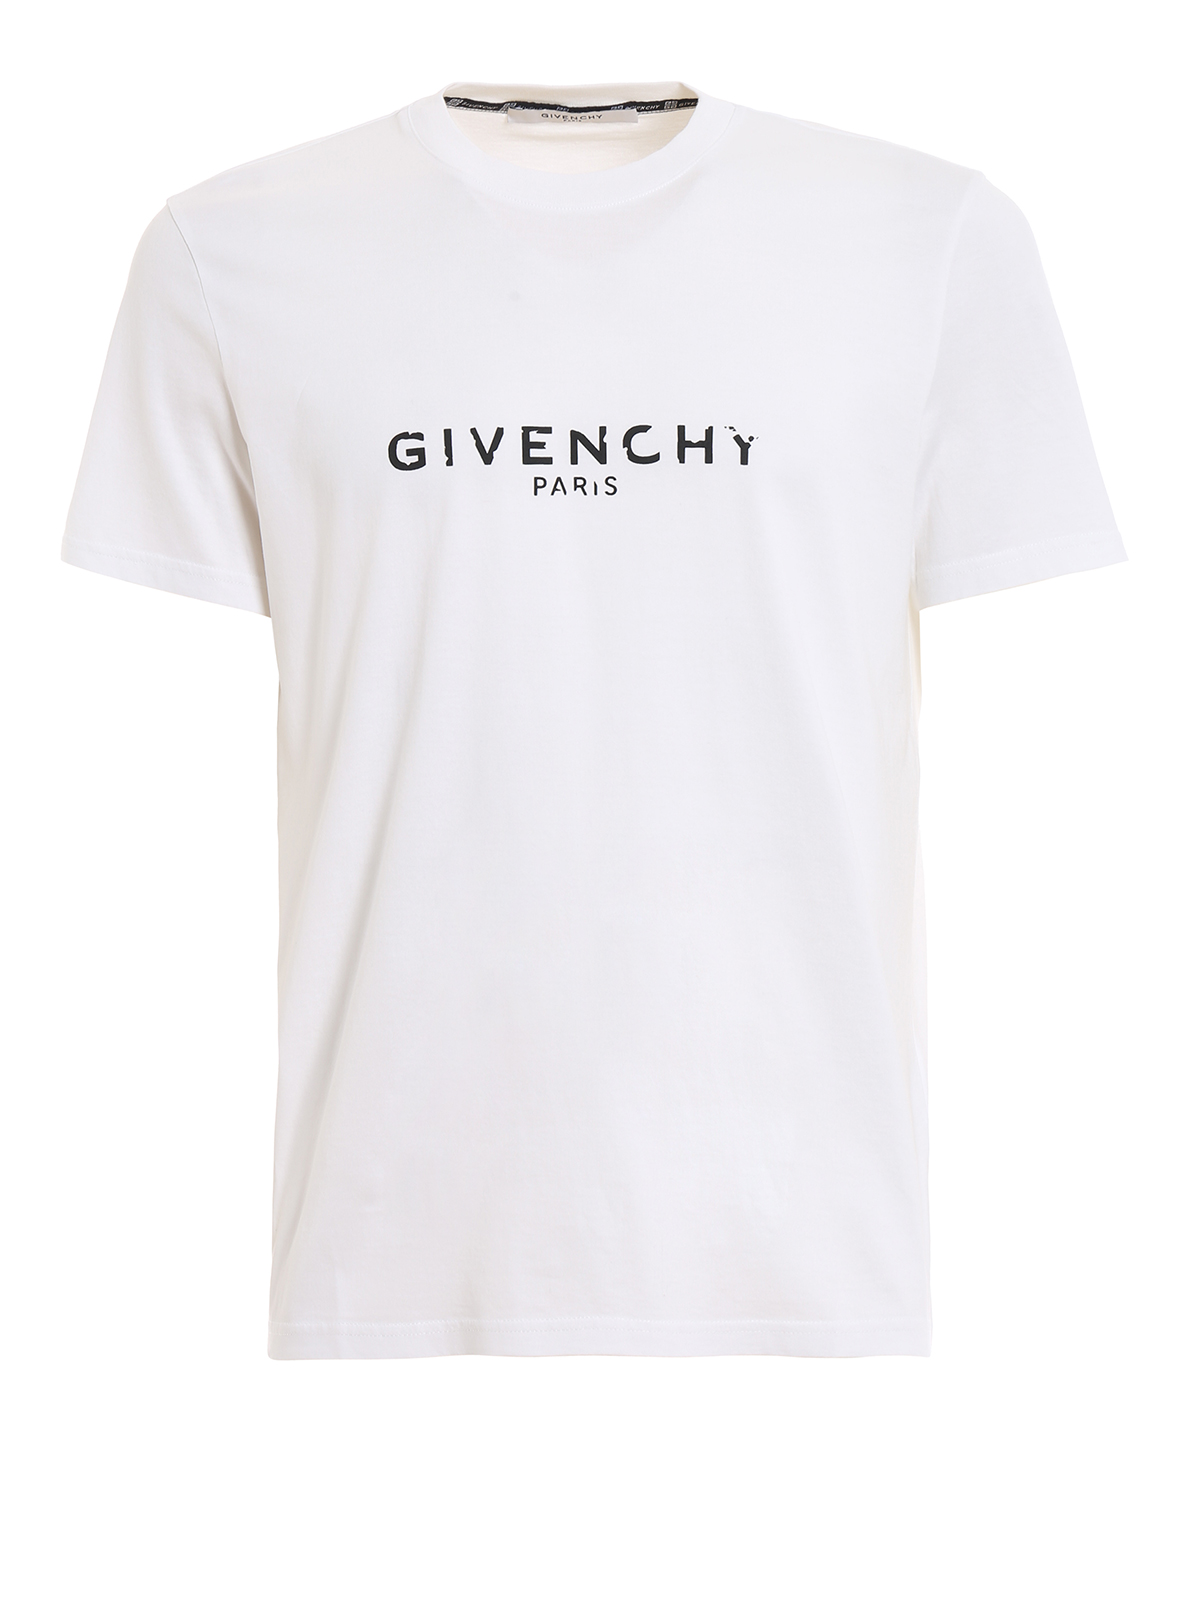 T-shirts Givenchy - Givenchy Paris white slim fit T-shirt - BM70K93002100